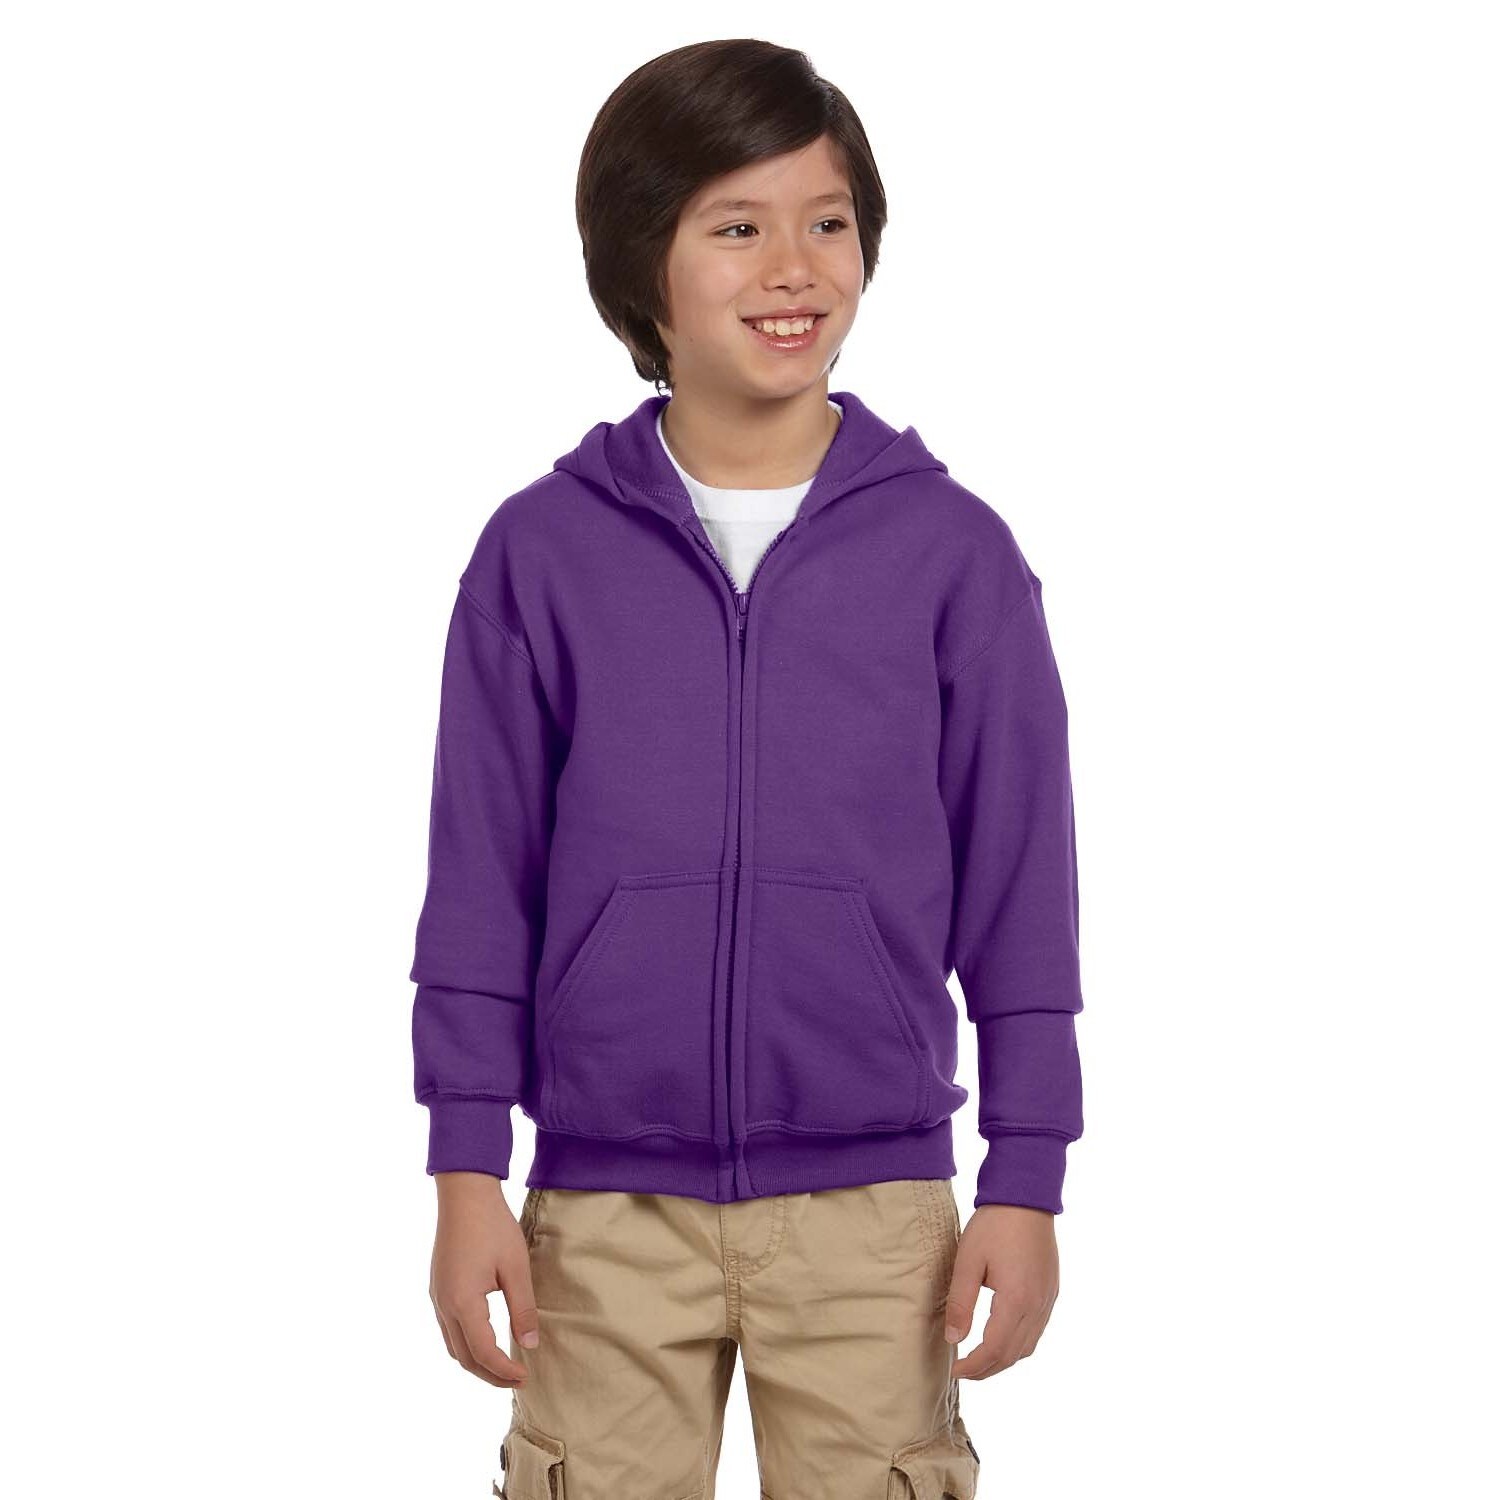 boys purple sweatshirt